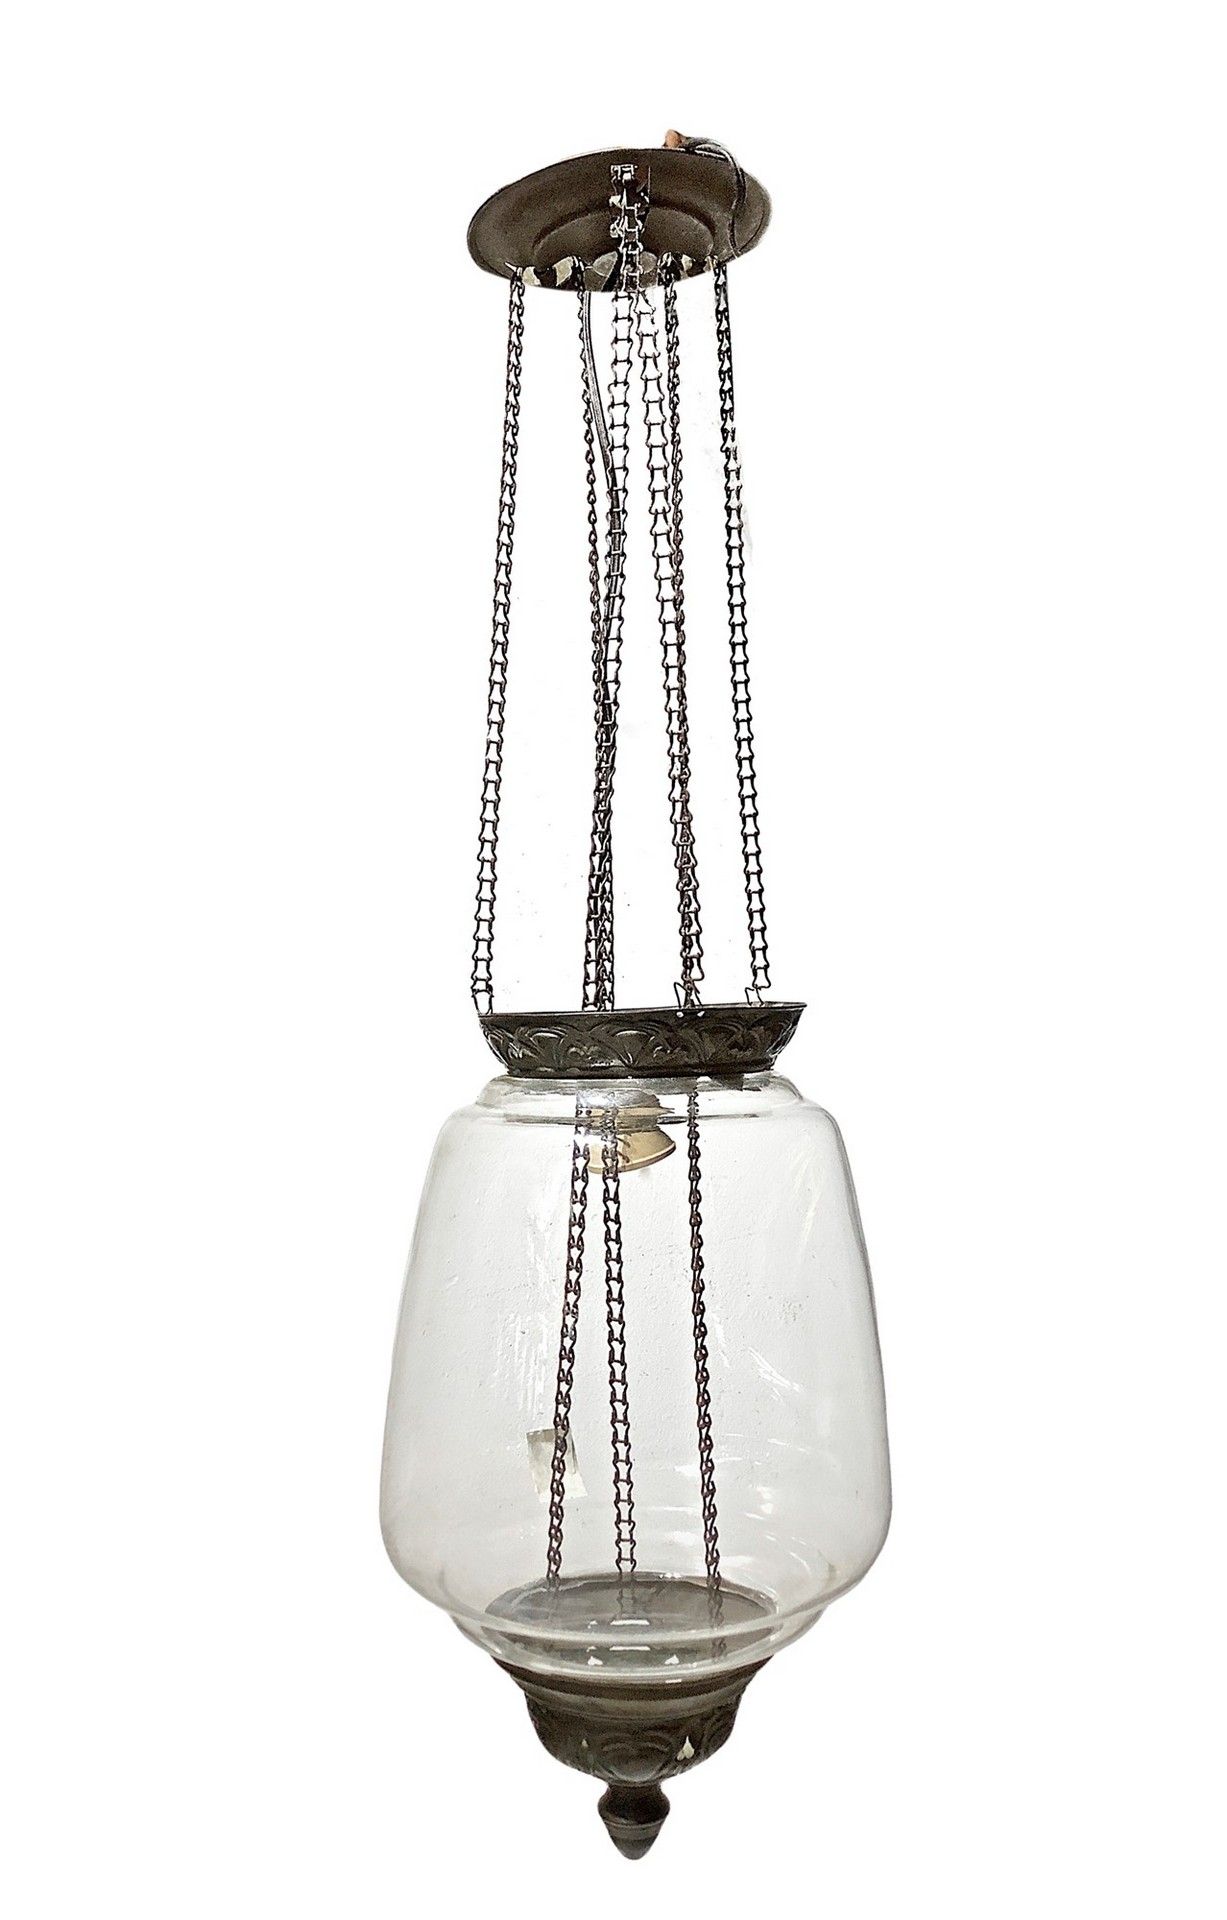 Null Lampe aus Glas und Messing, Anfang des 20. Jahrhunderts, H cm 70x20